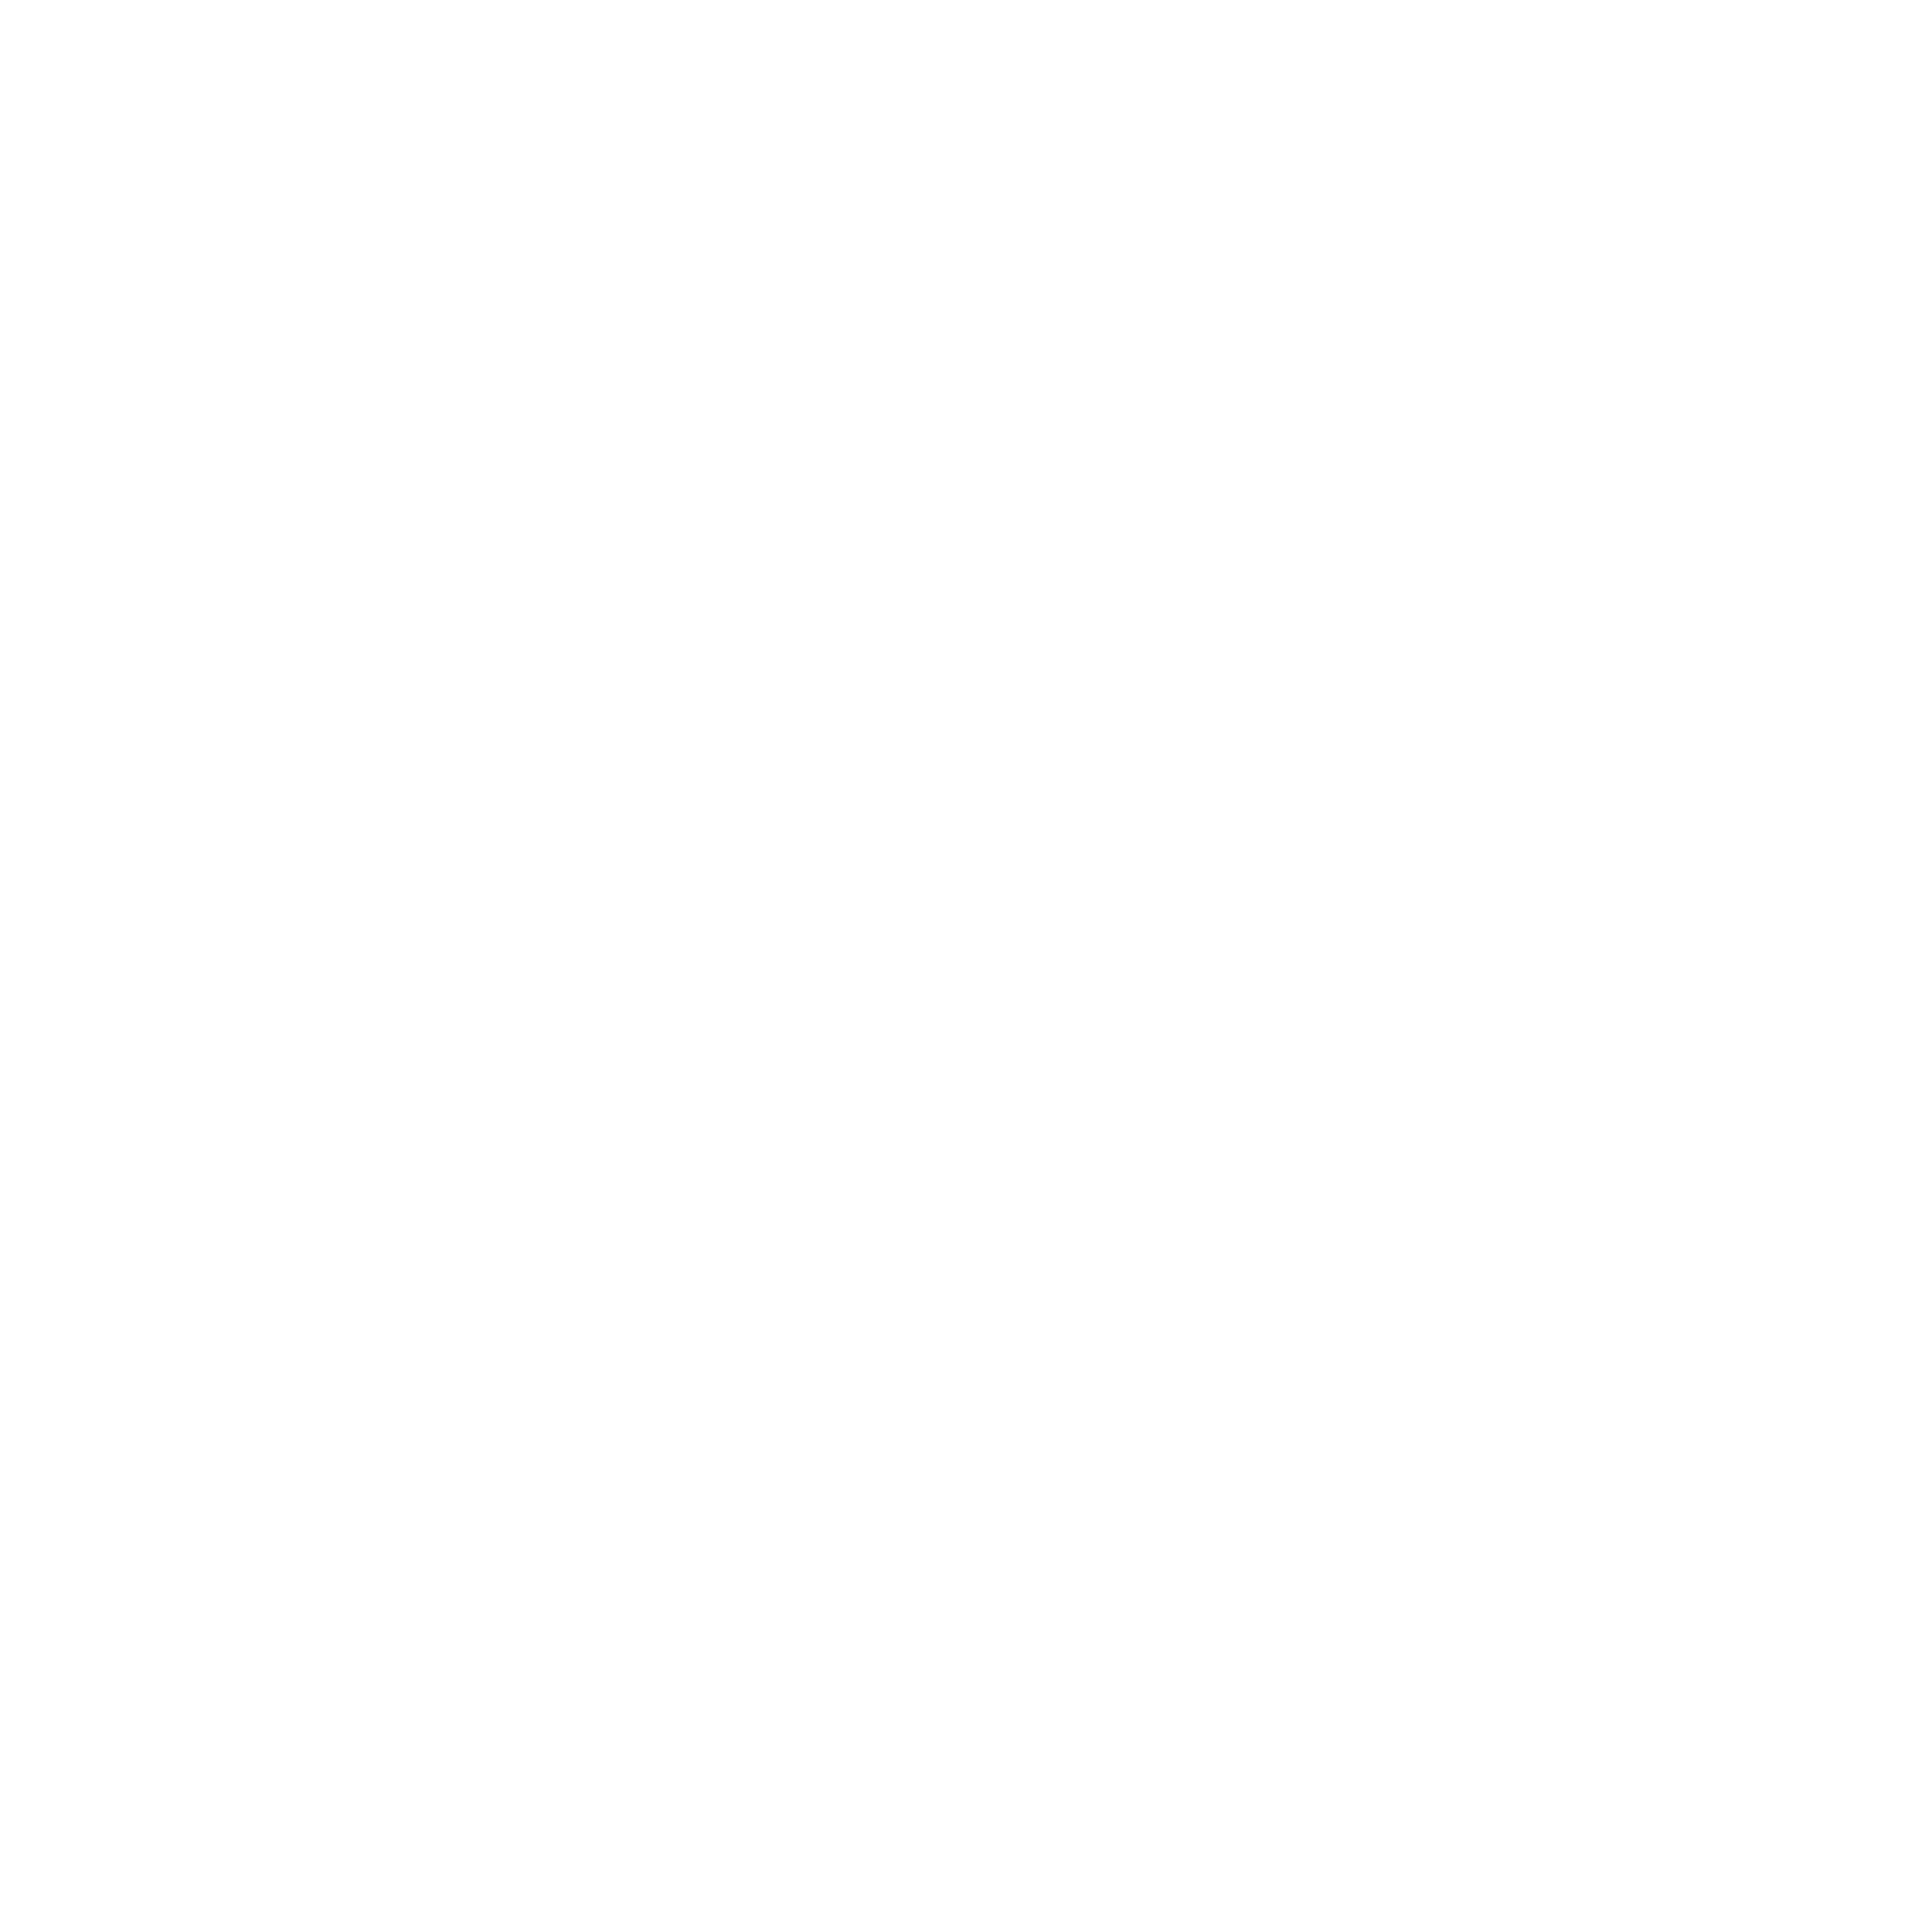 Carolina Herrera Logo - Carolina Herrera Logo PNG Transparent & SVG Vector